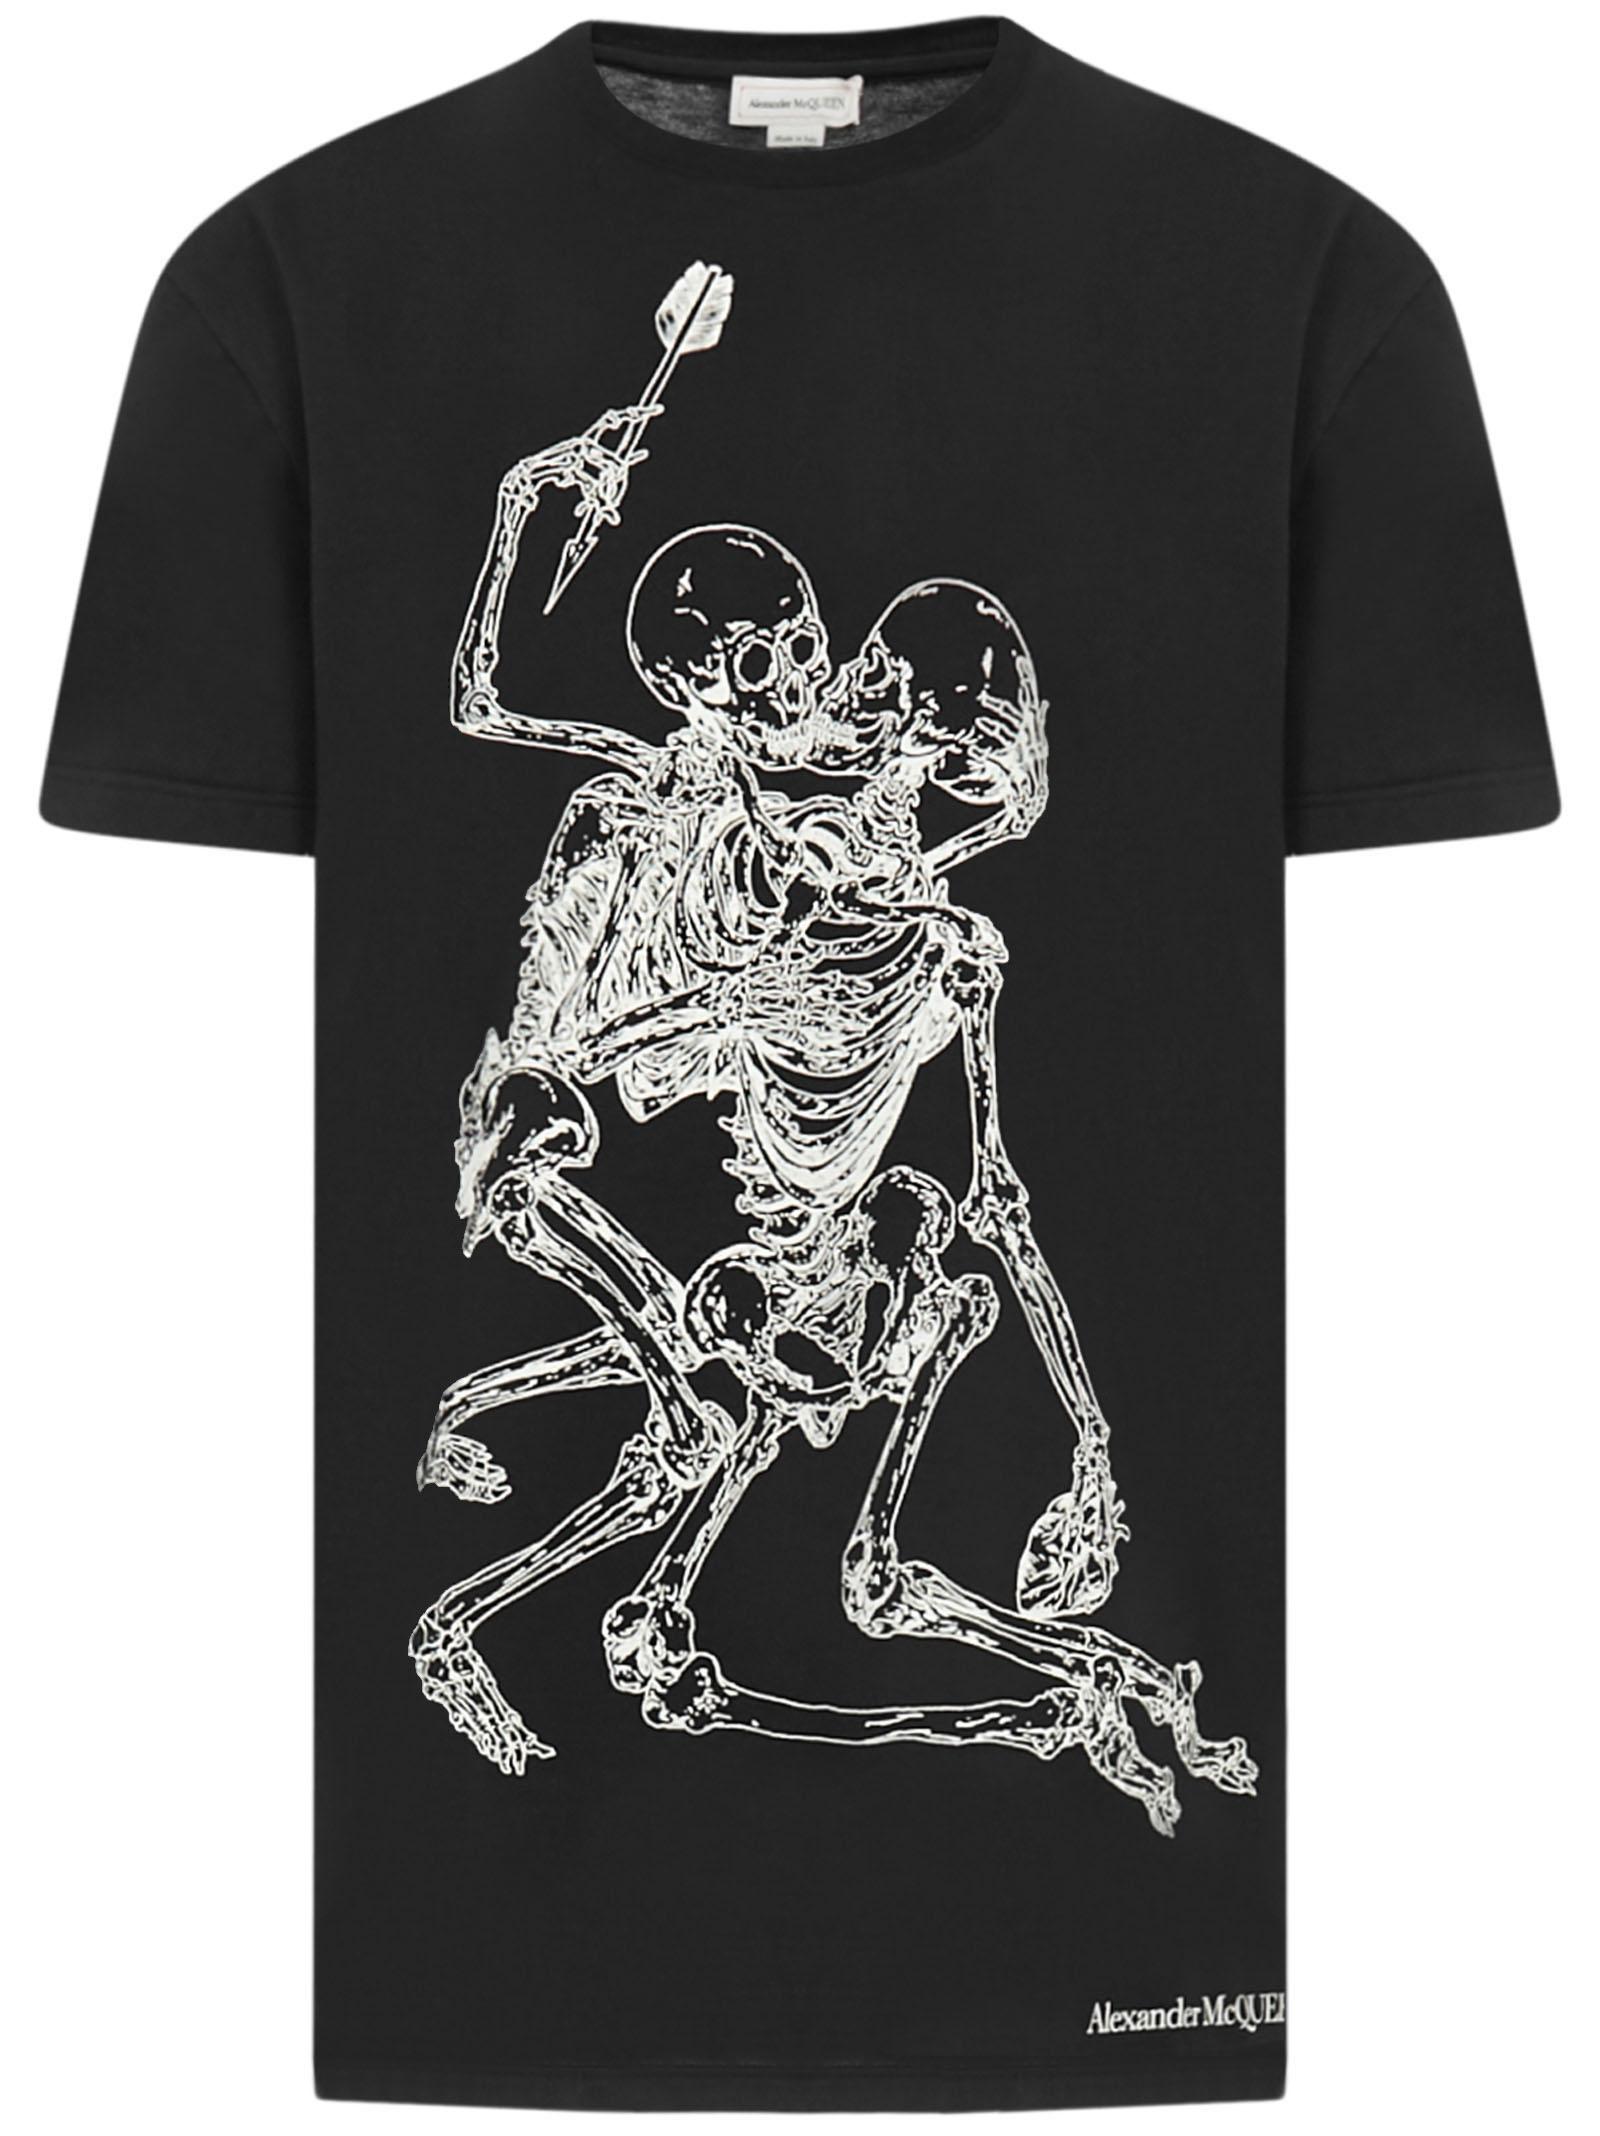 Alexander McQueen Cotton Lovers Skeleton T-shirt in Black for Men - Lyst